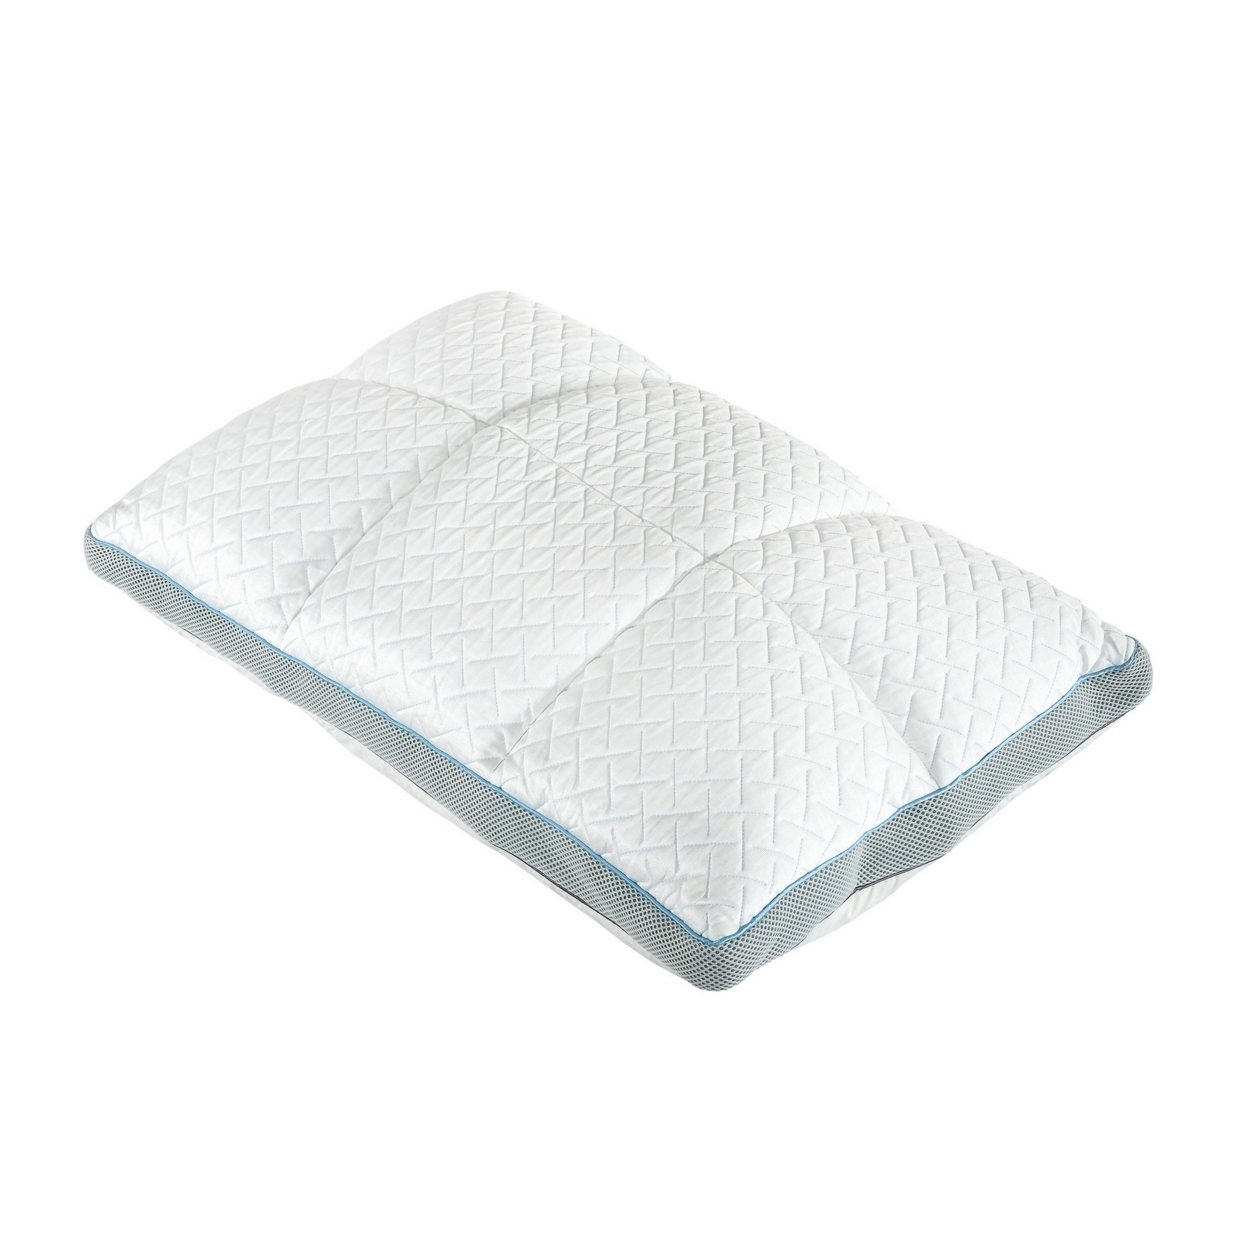 Beda 18 X 27 Queen Size Memory Foam Pillow, Fire Retardant Material, White- Saltoro Sherpi